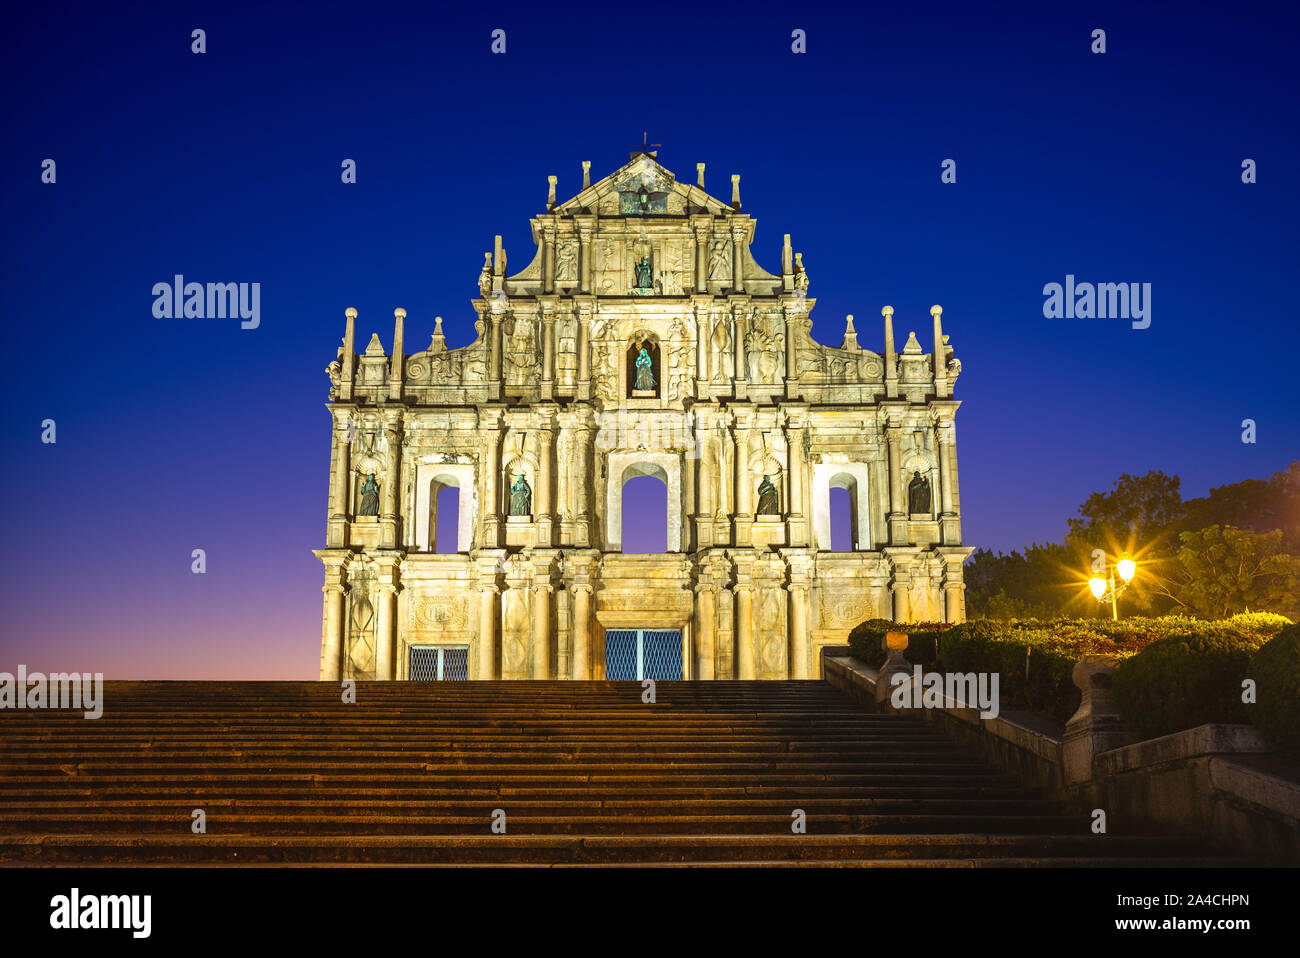 Ruins of St. Paul's in Macau, China at night Stock Photo